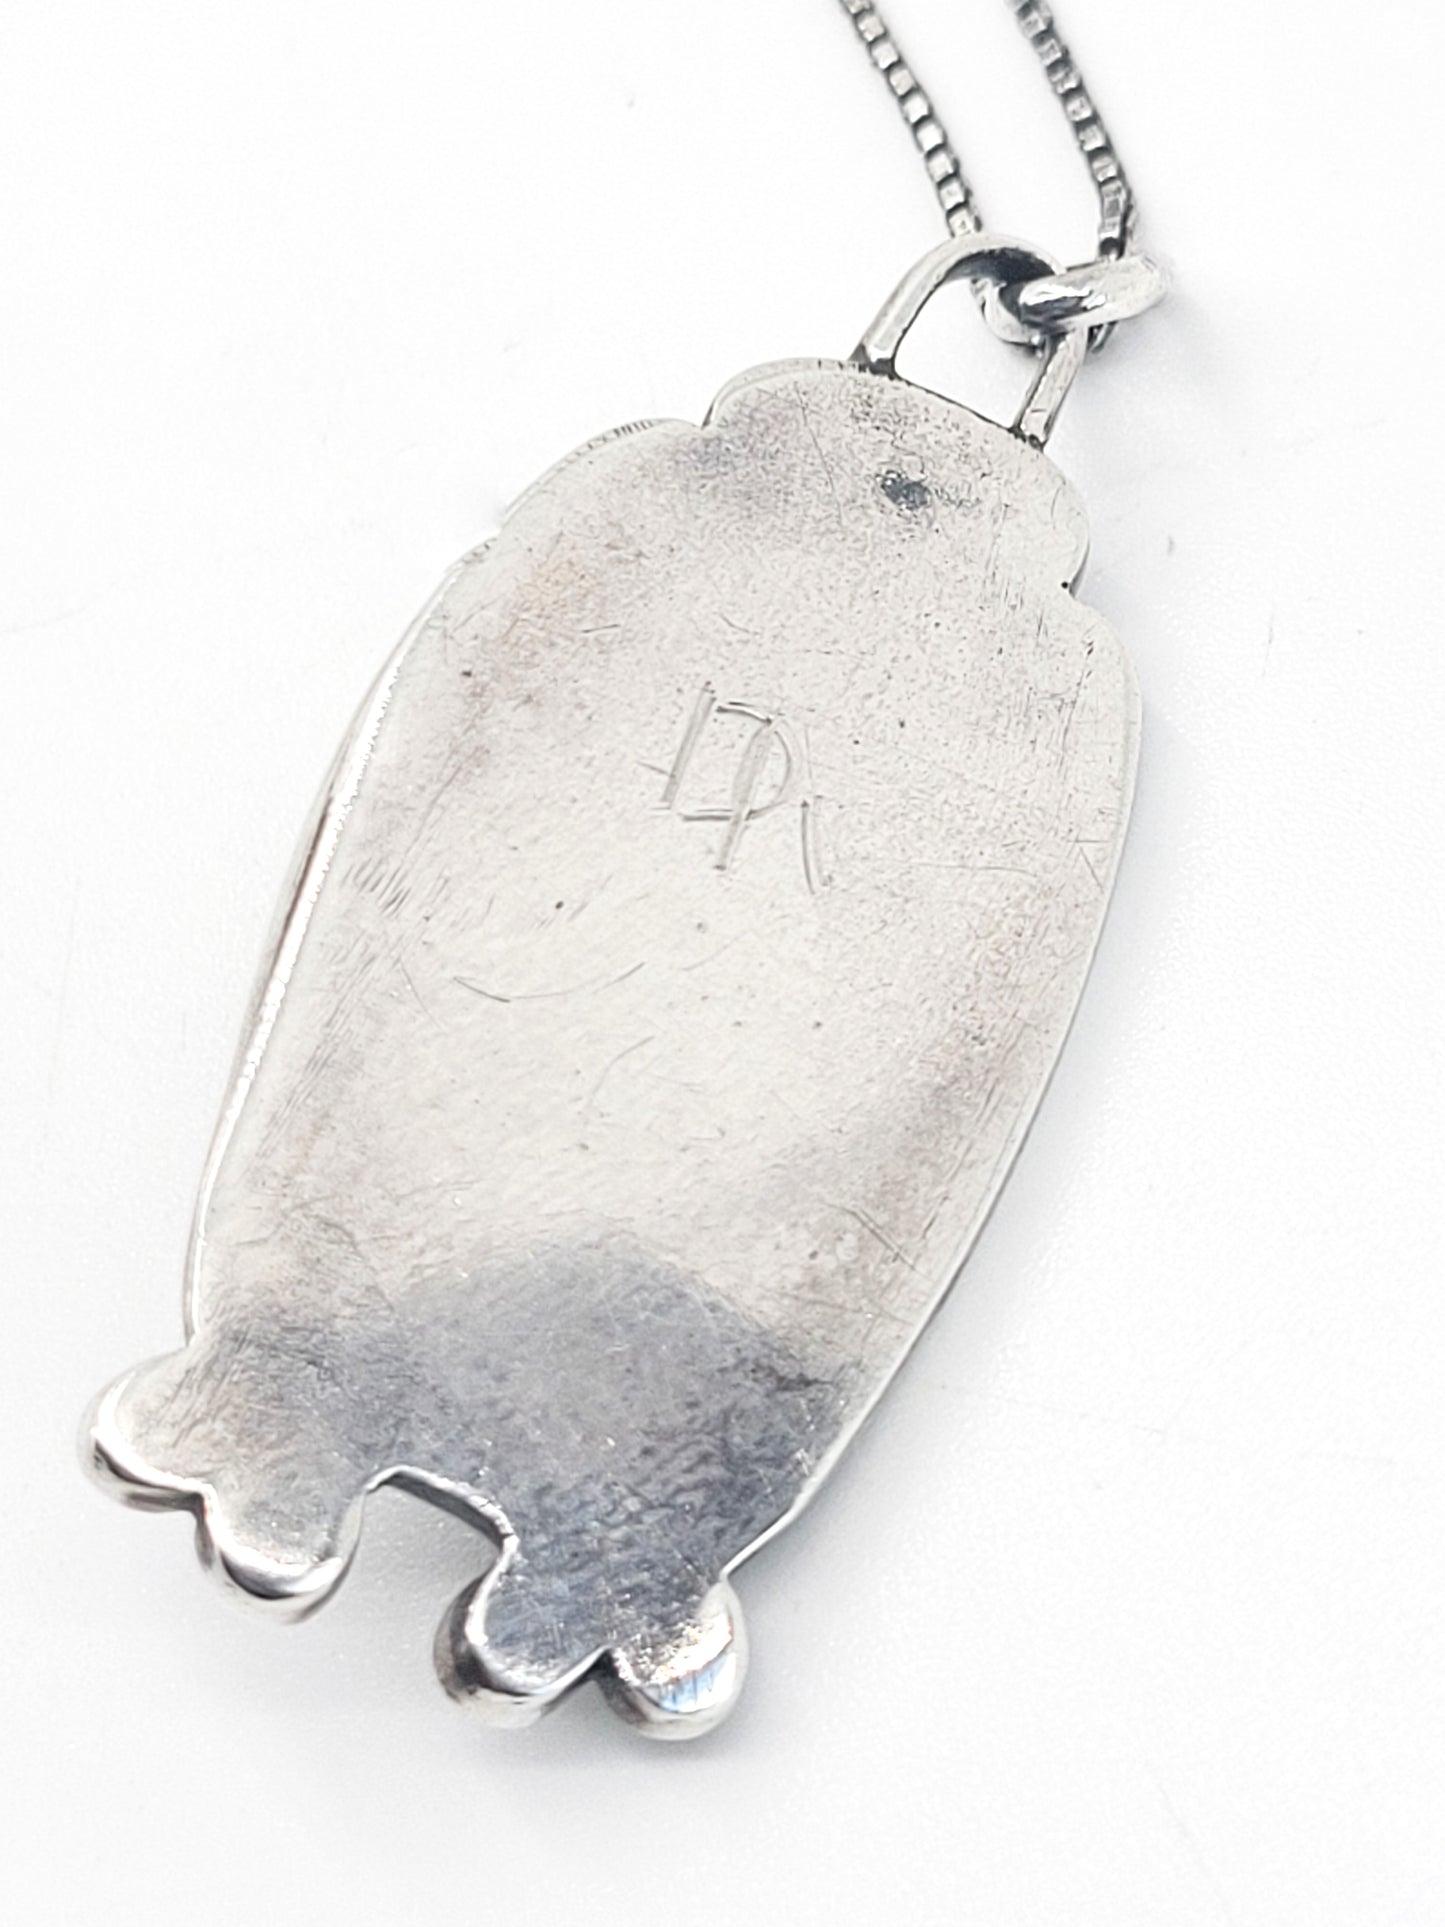 DA Malachite shadow box Native American sterling silver vintage pendant necklace